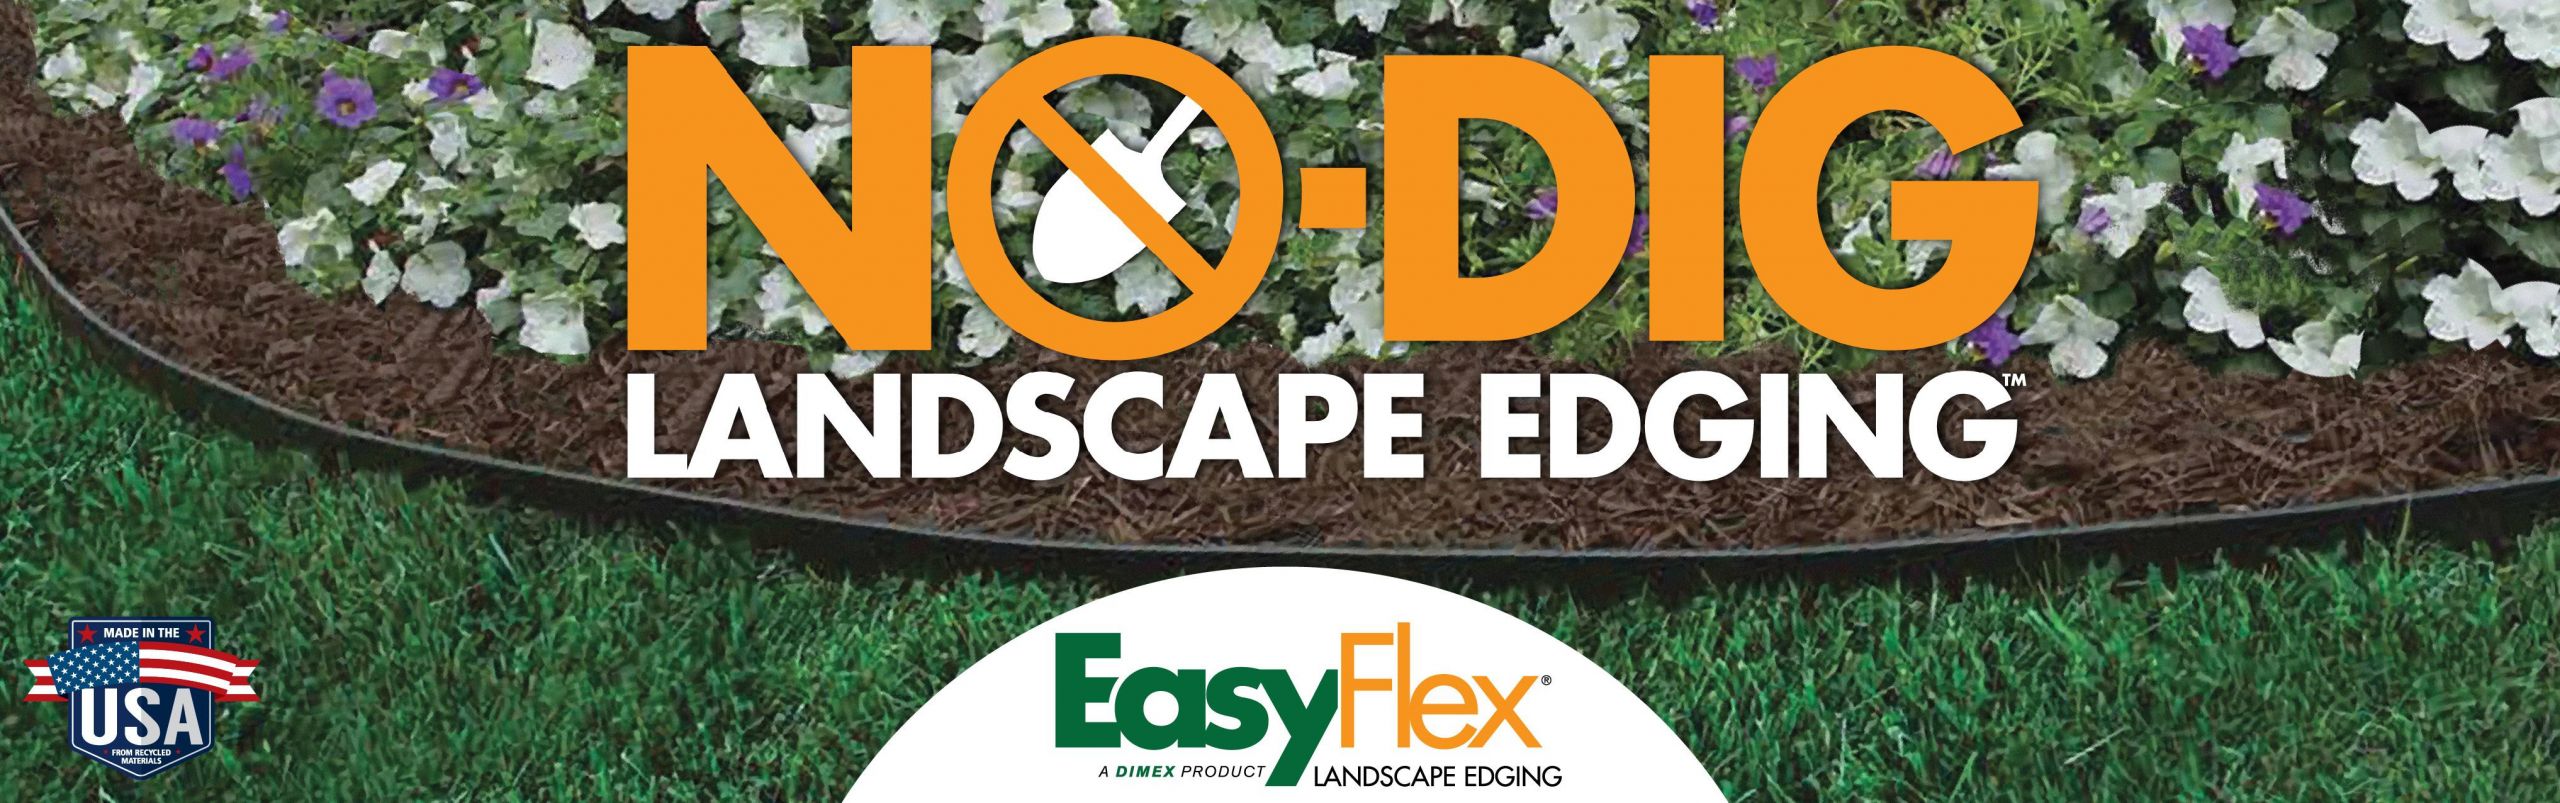 No Digging Landscape Edging
 Amazon Dimex EasyFlex No Dig Plastic Landscape